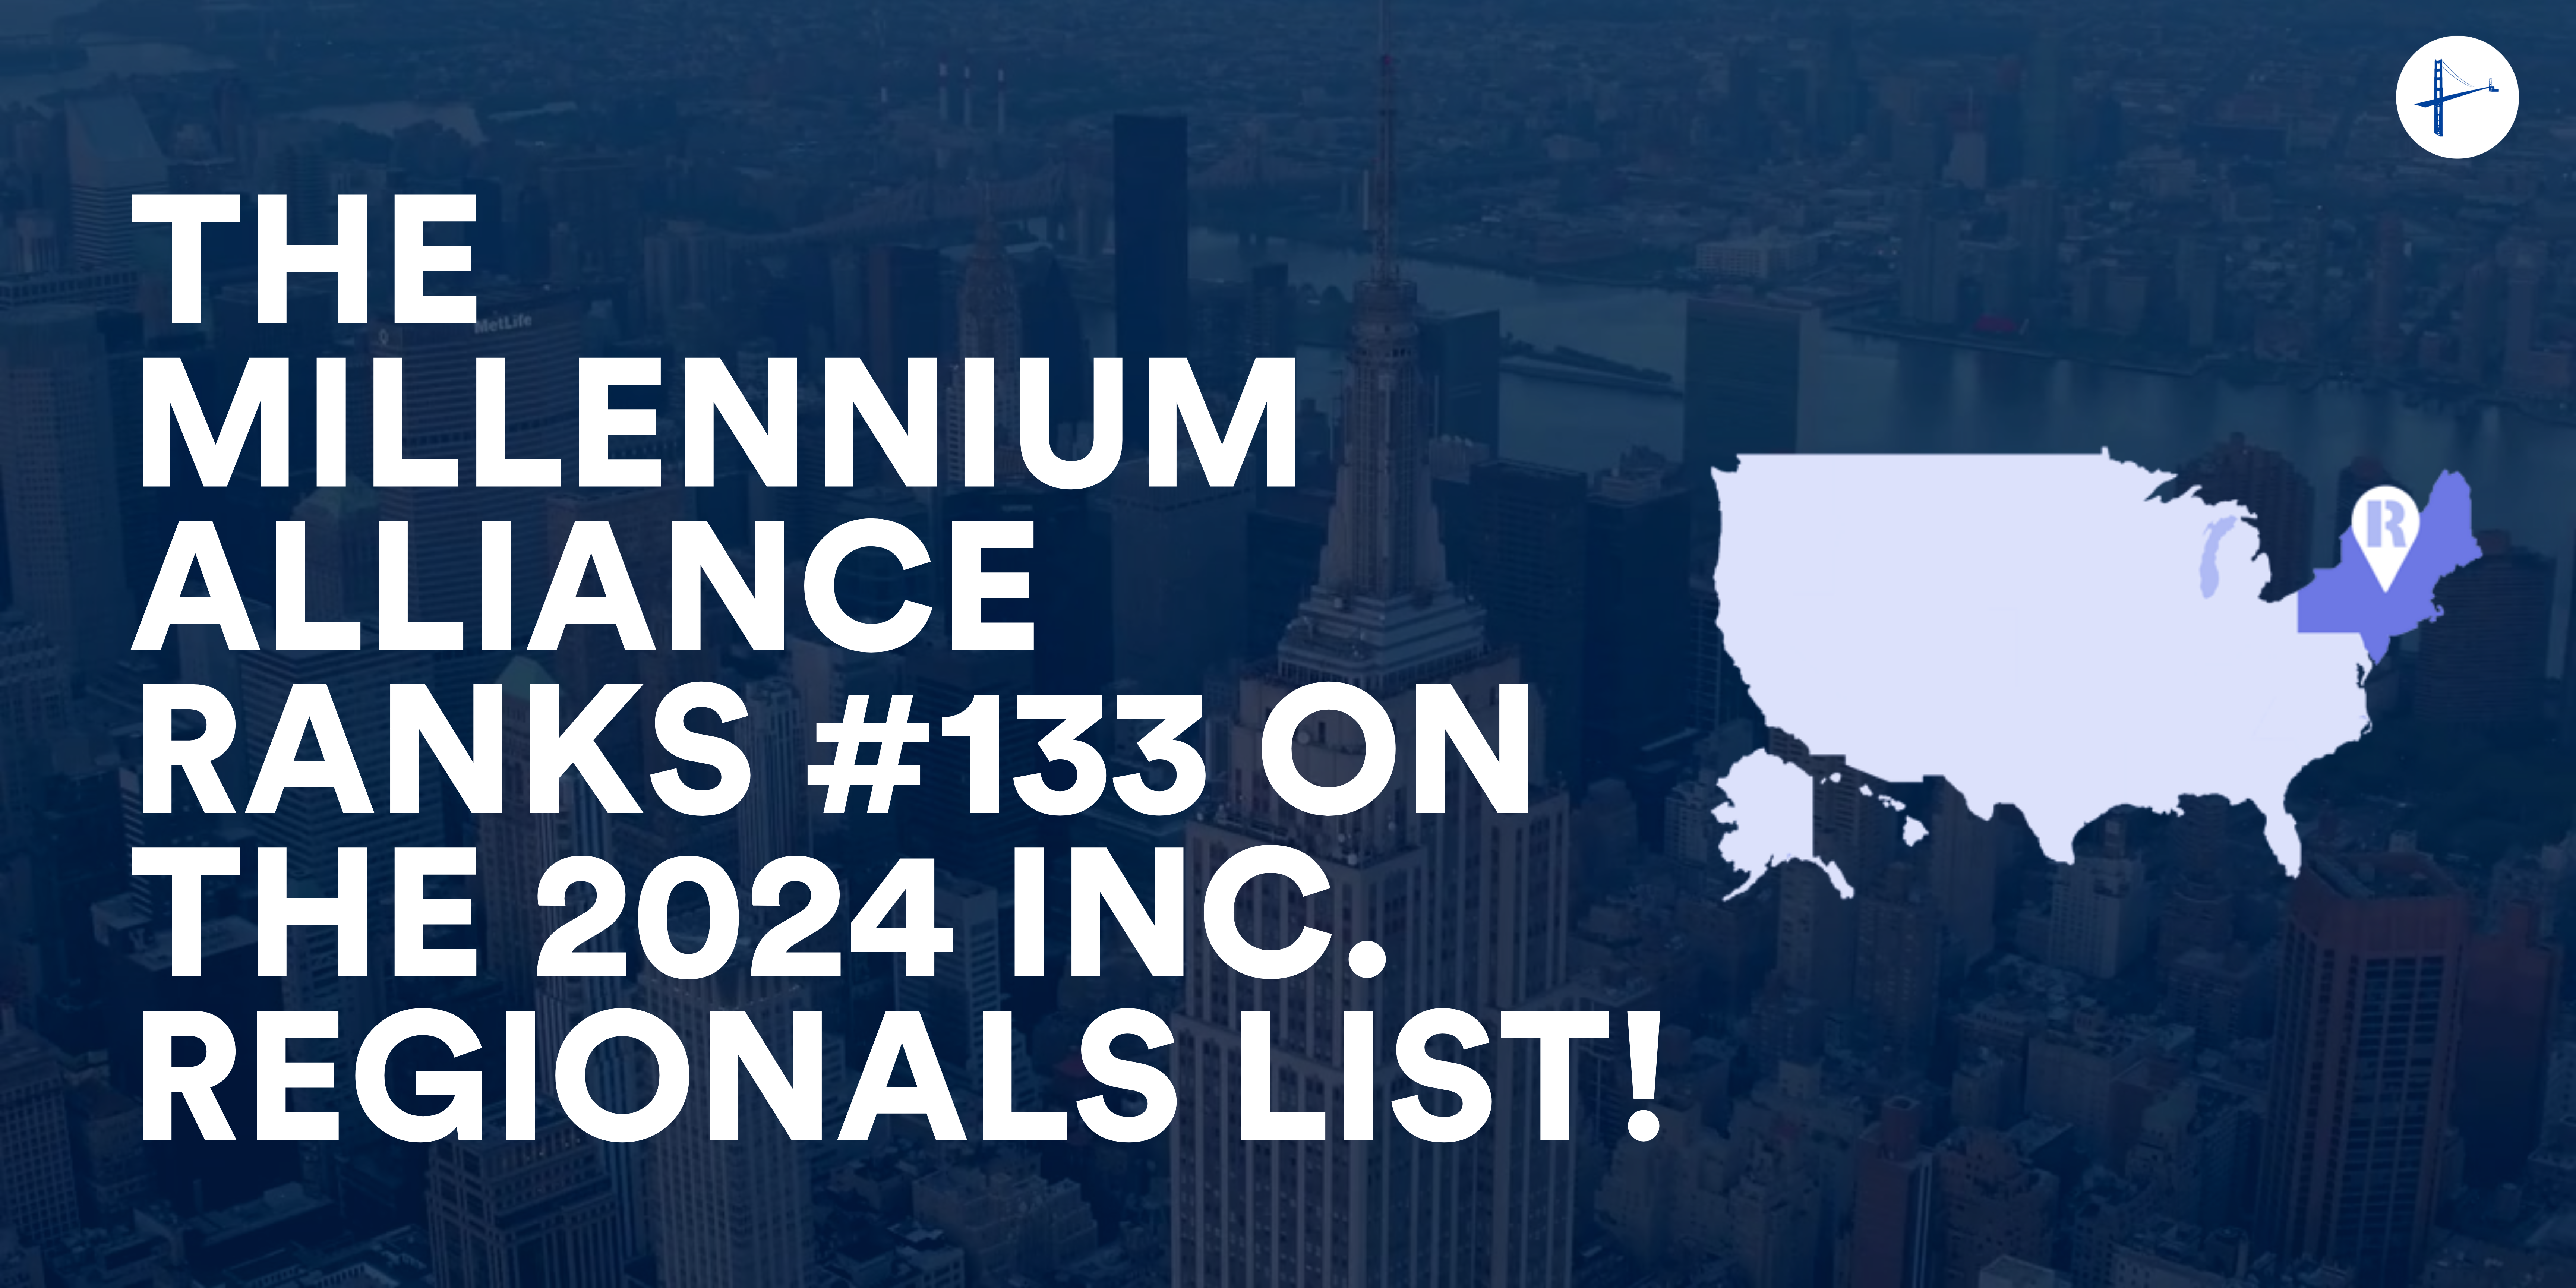 The Millennium Alliance Ranks No. 133 on the 2024 Inc. Regionals List